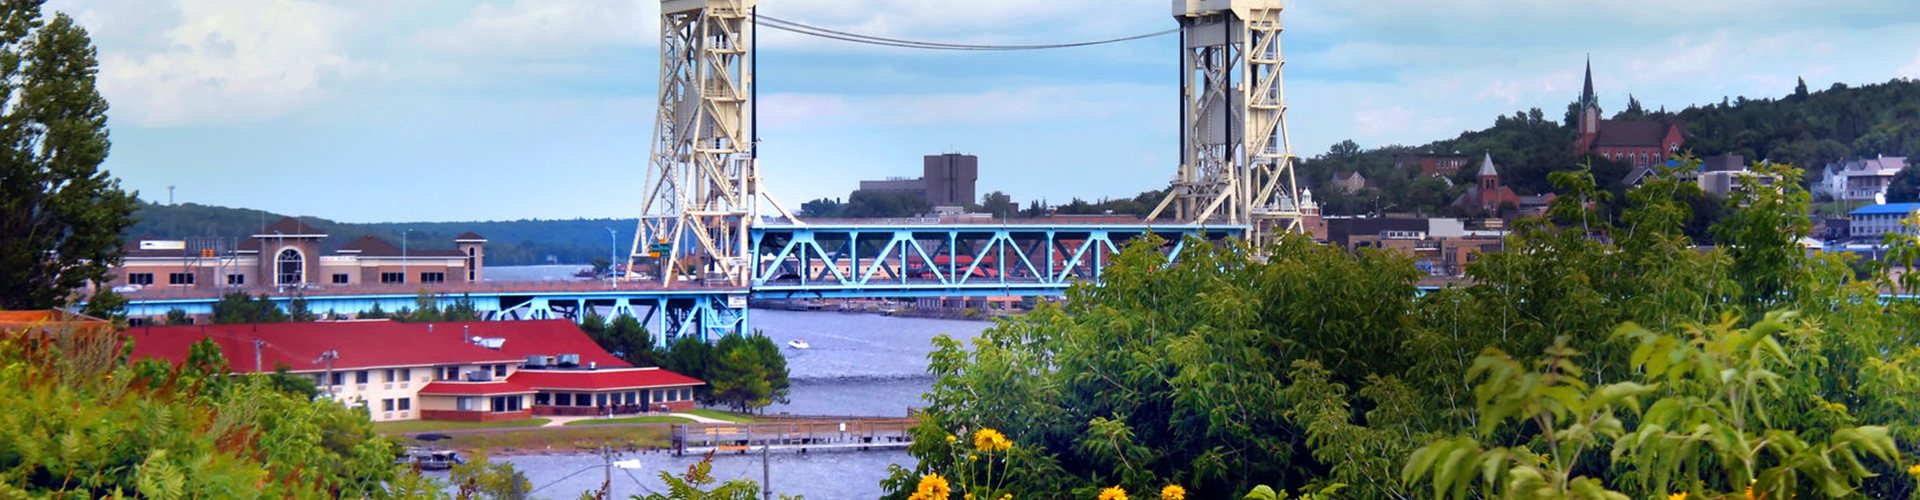 blue bridge stretching across a river